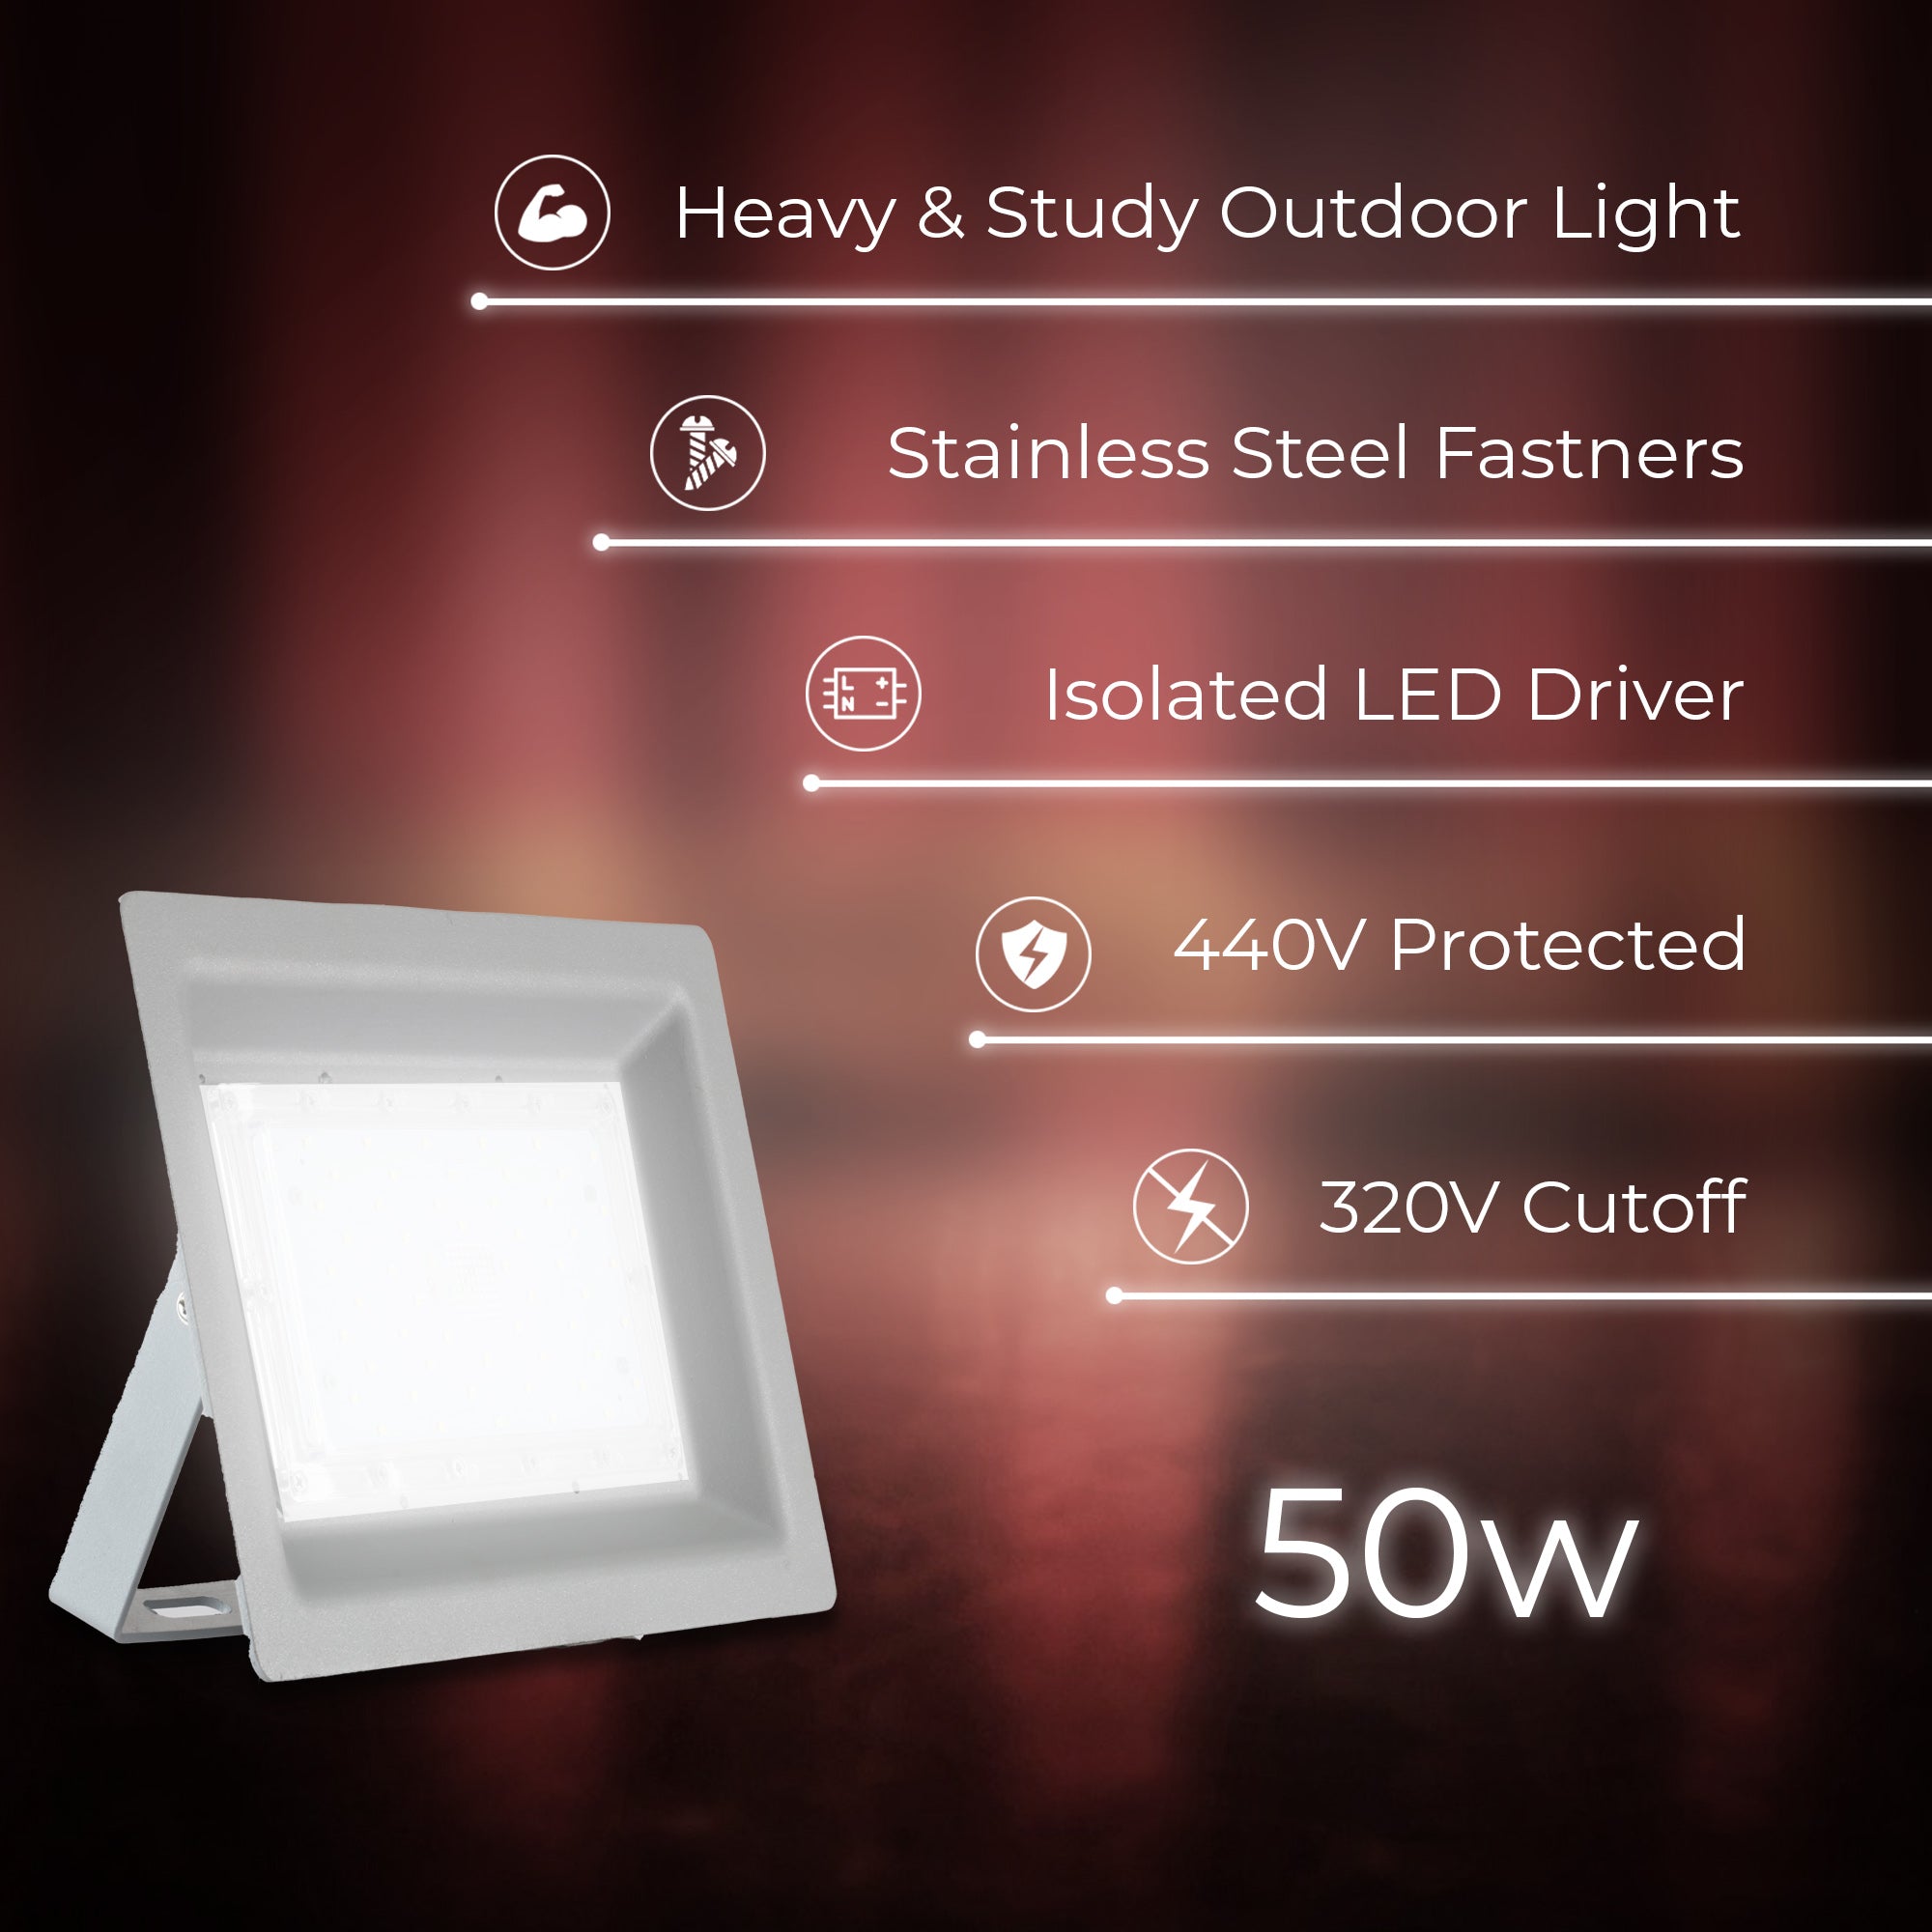 Specifications of Zeva 50W led focus light #watts_50w